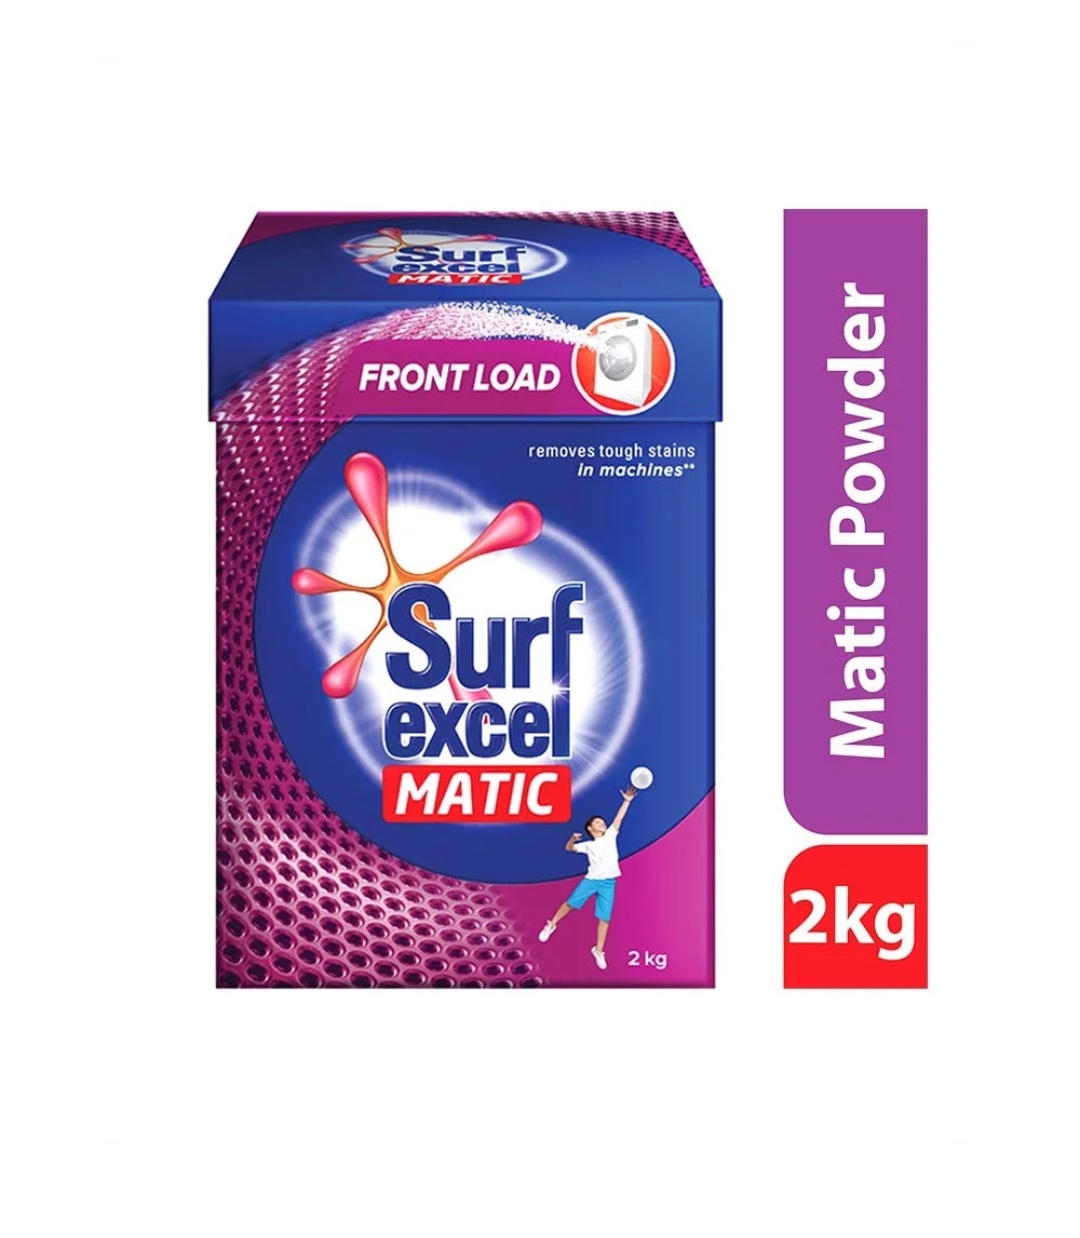 Surf Excel Matic Front Load Detergent Powder (Carton), 2 kg